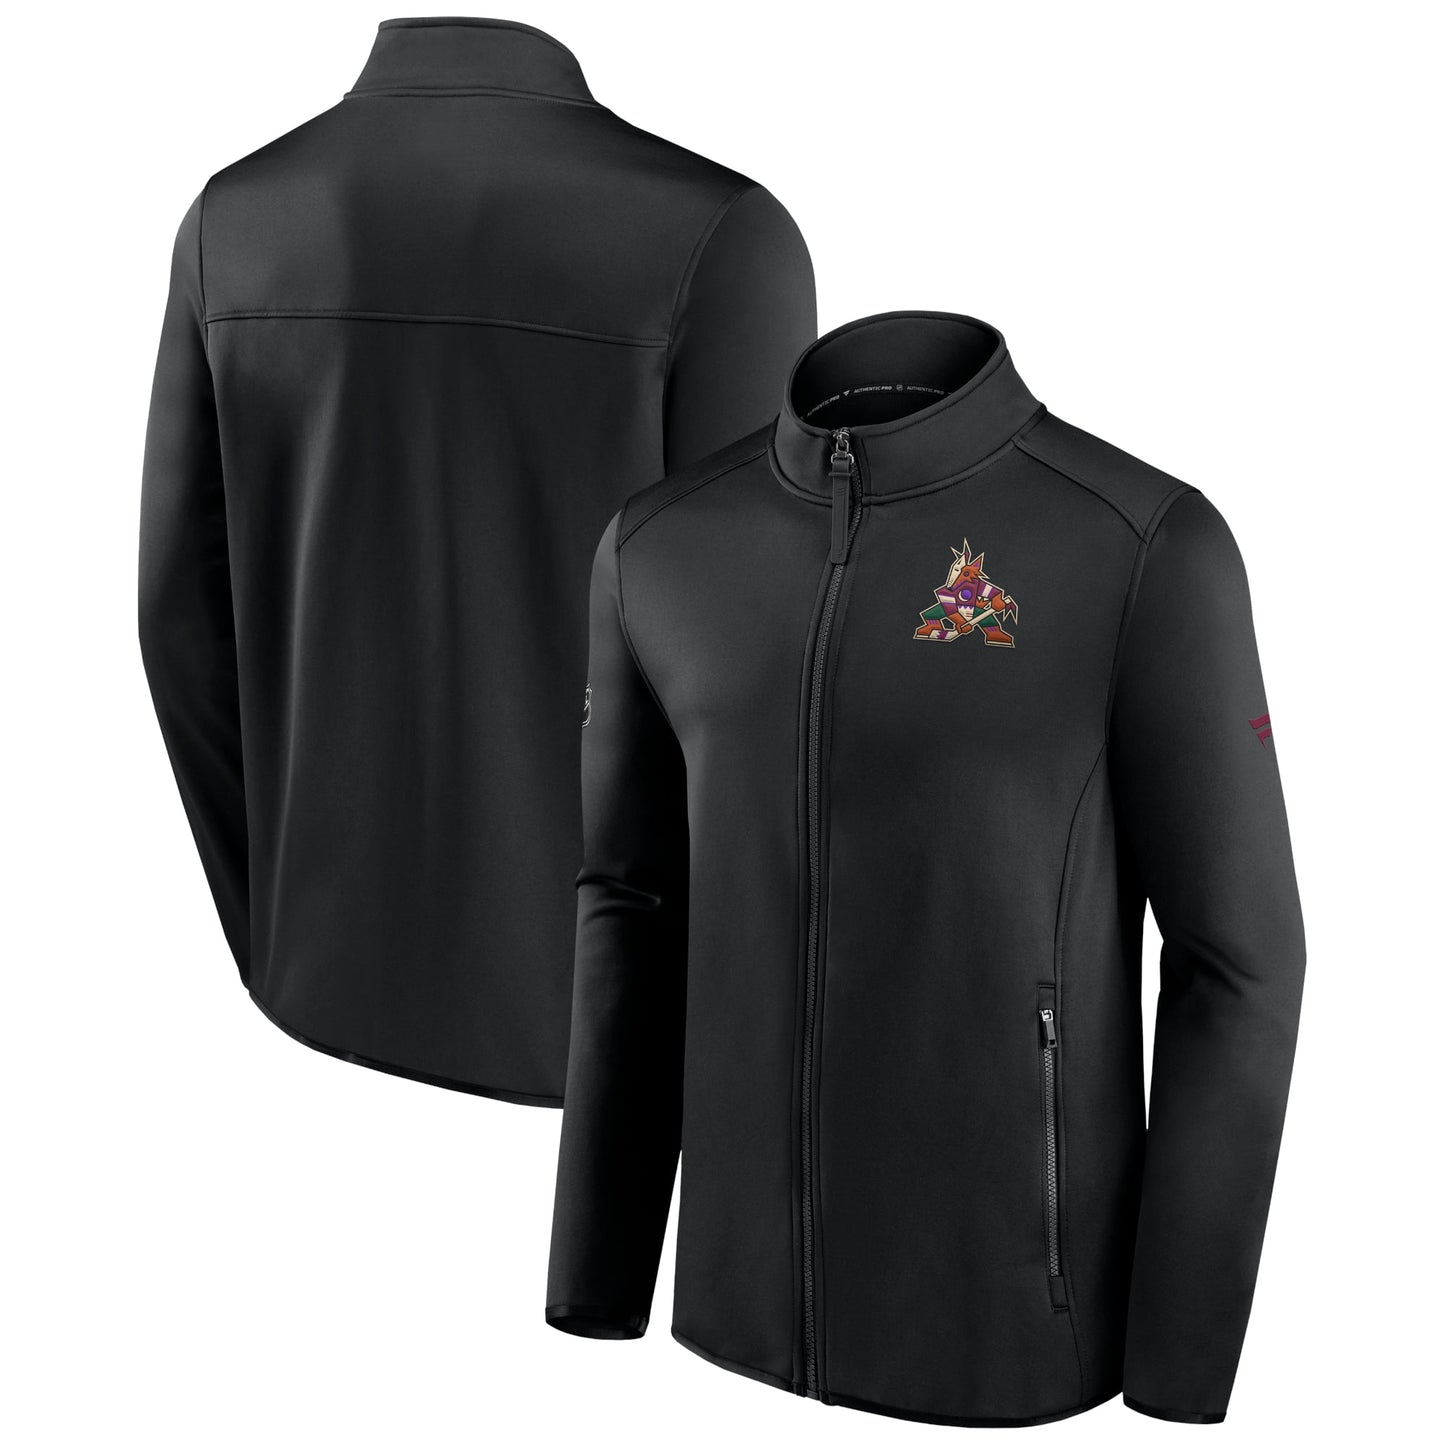 Men's Fanatics Branded Black Arizona Coyotes Authentic Pro Rink Fleece Full-Zip Jacket